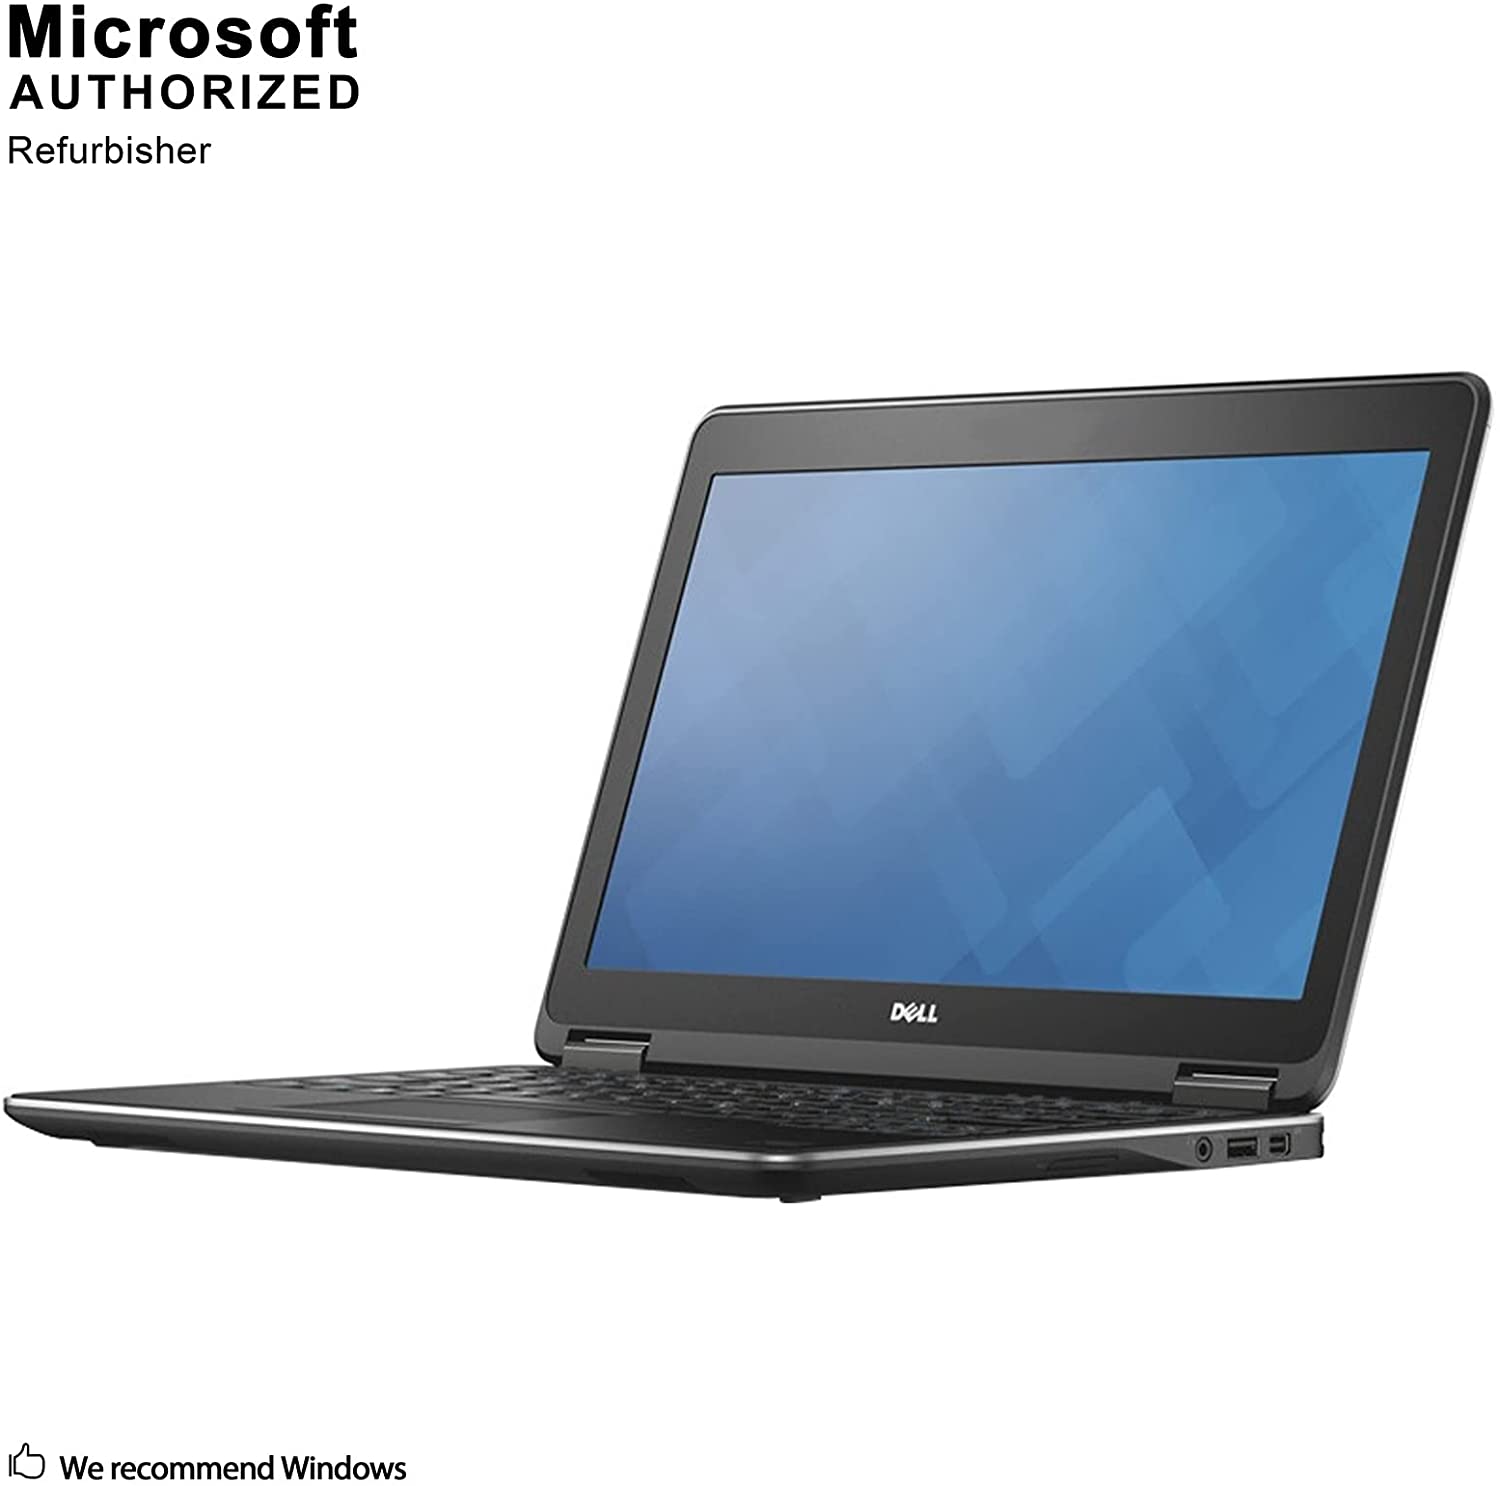 Dell Latitude E7240 Ultrabook PC - Intel Core i5-4300U 1.9GHz 8GB 256GB SSD Windows 10 Professional (Renewed)